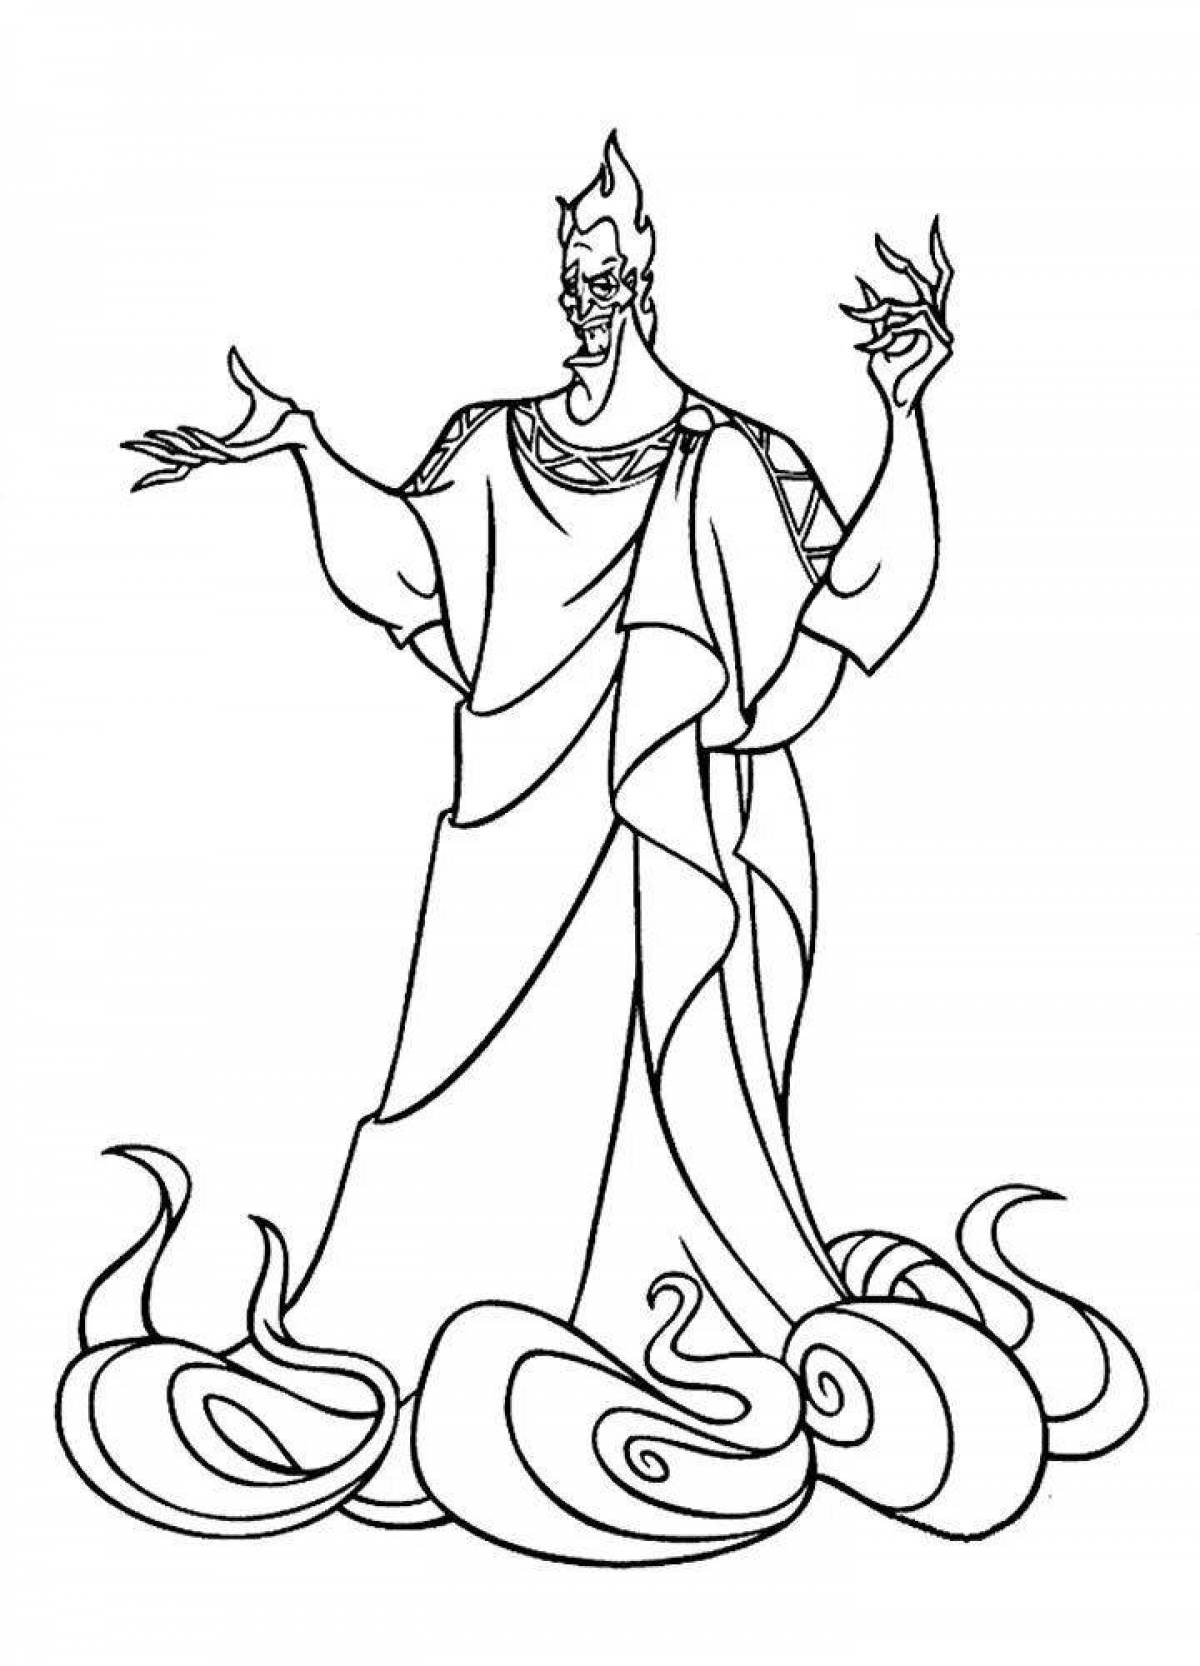 Аид бог древней греции рисунок